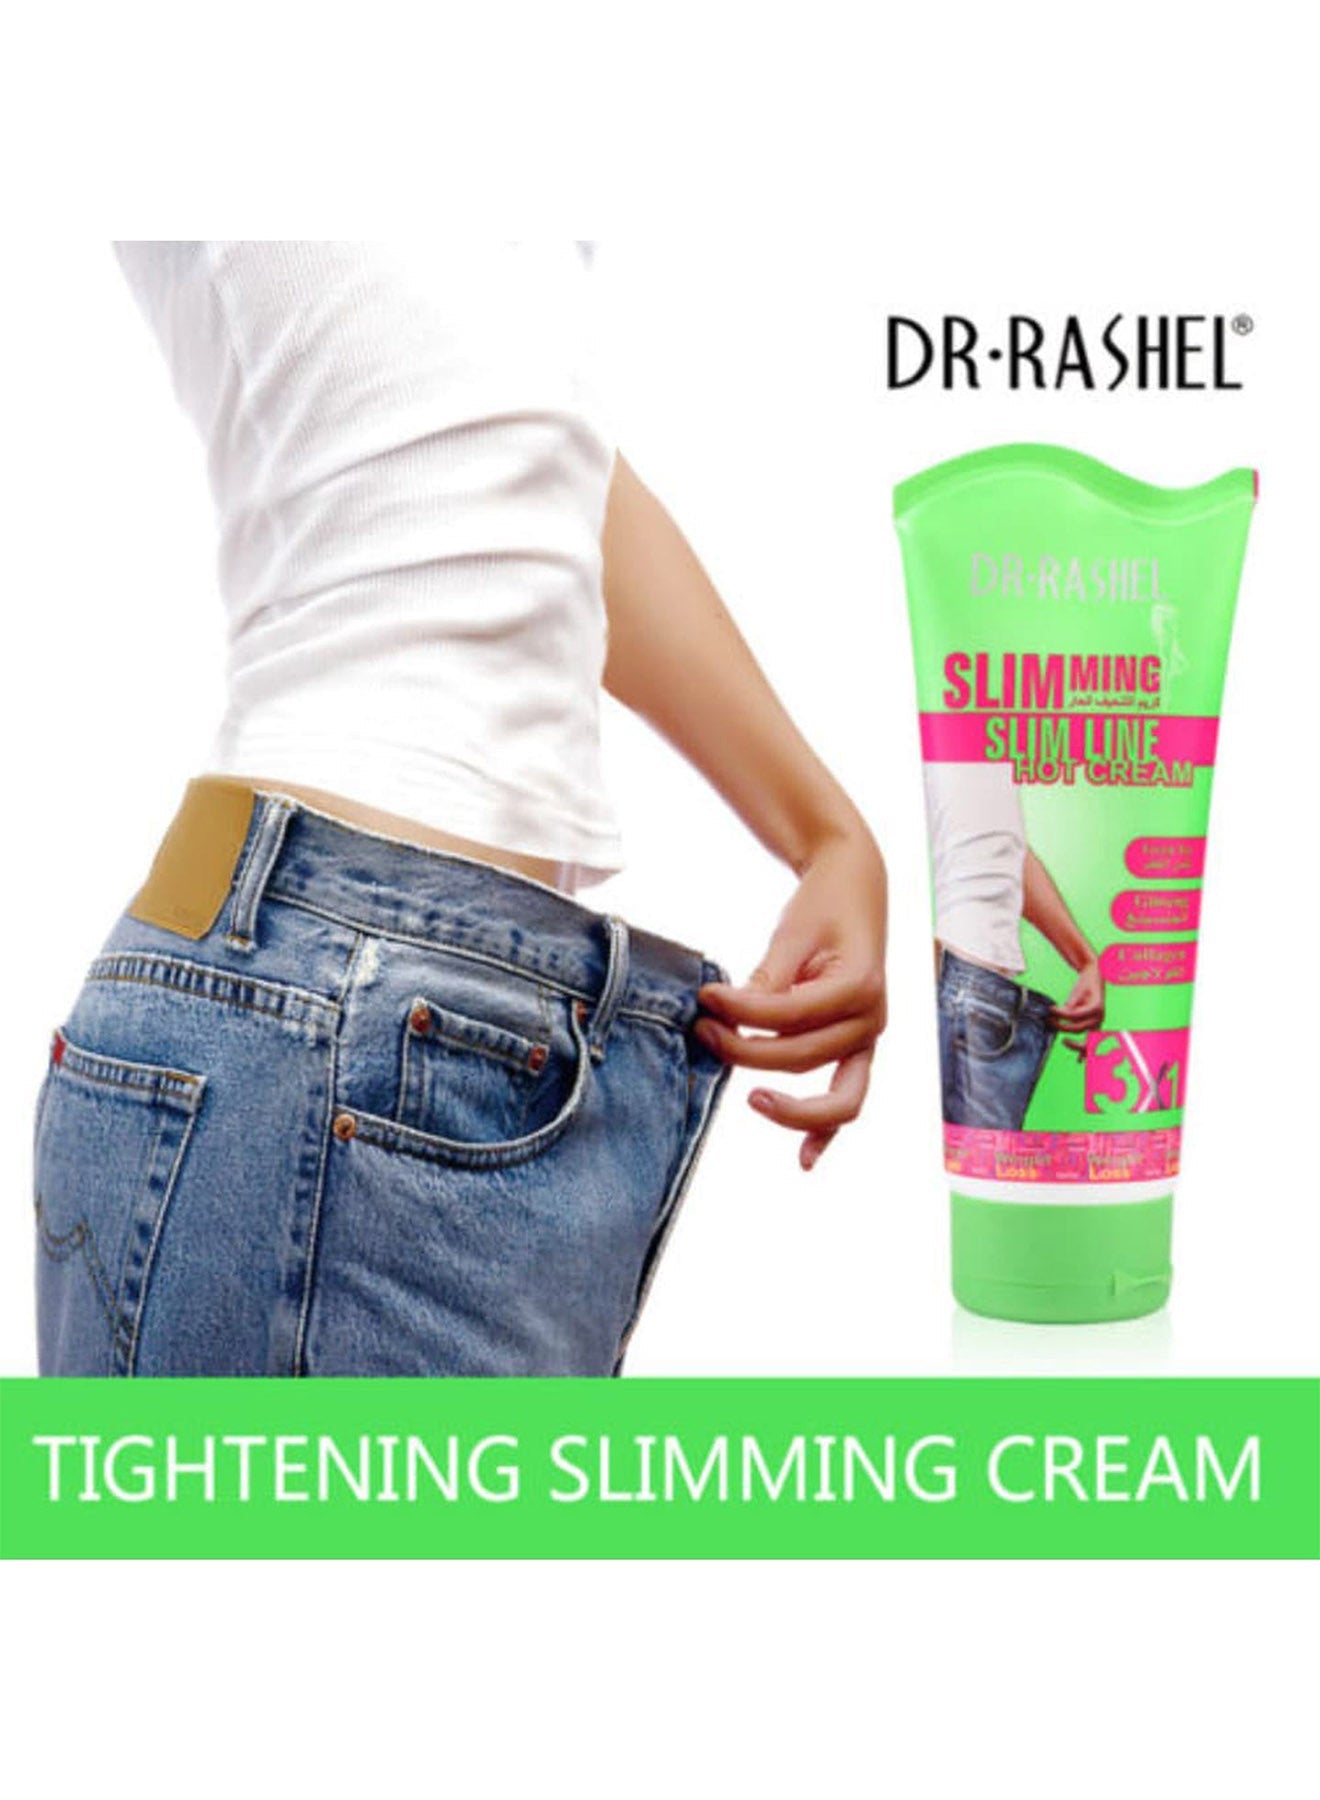 Dr Rashel Collagen lose weight milk Body stomach Hot Slimming Cream 150g Value Pack of 12 